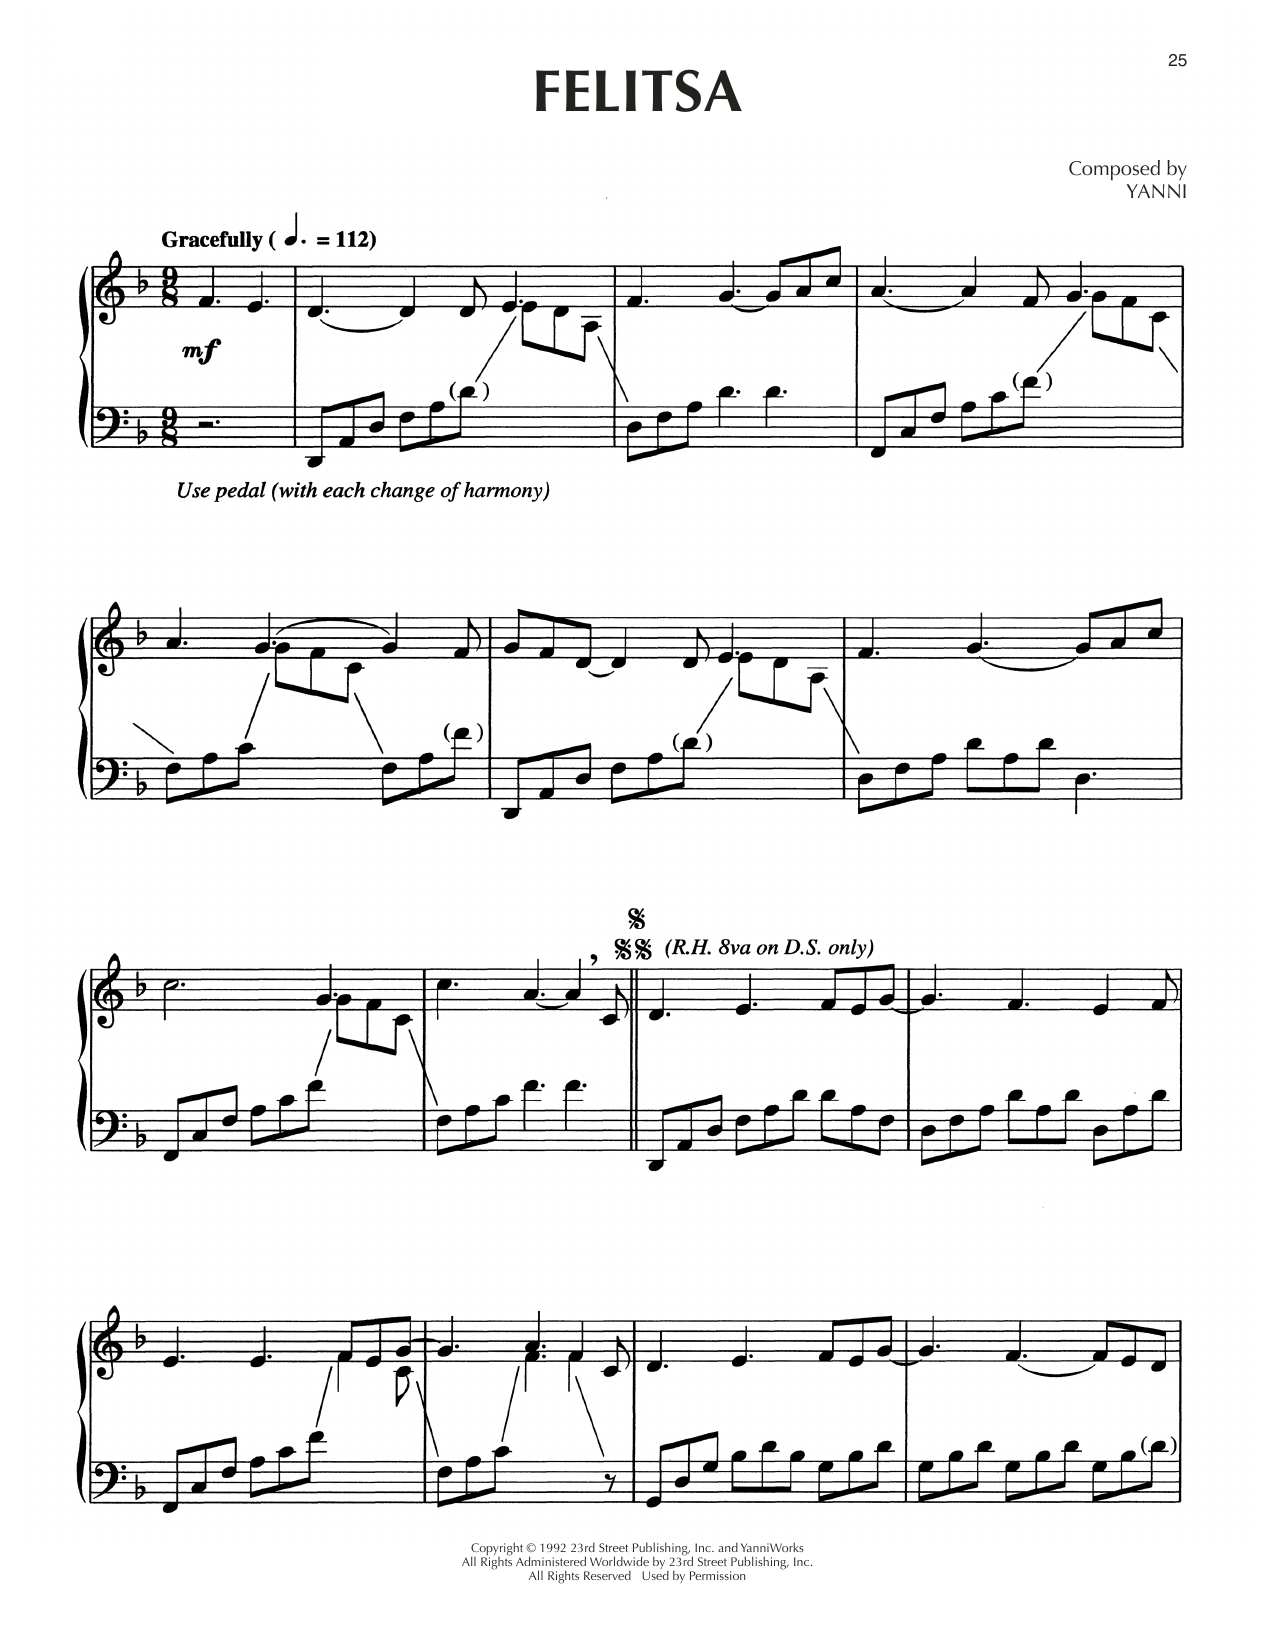 Yanni Felitsa Sheet Music Notes & Chords for Piano Solo - Download or Print PDF